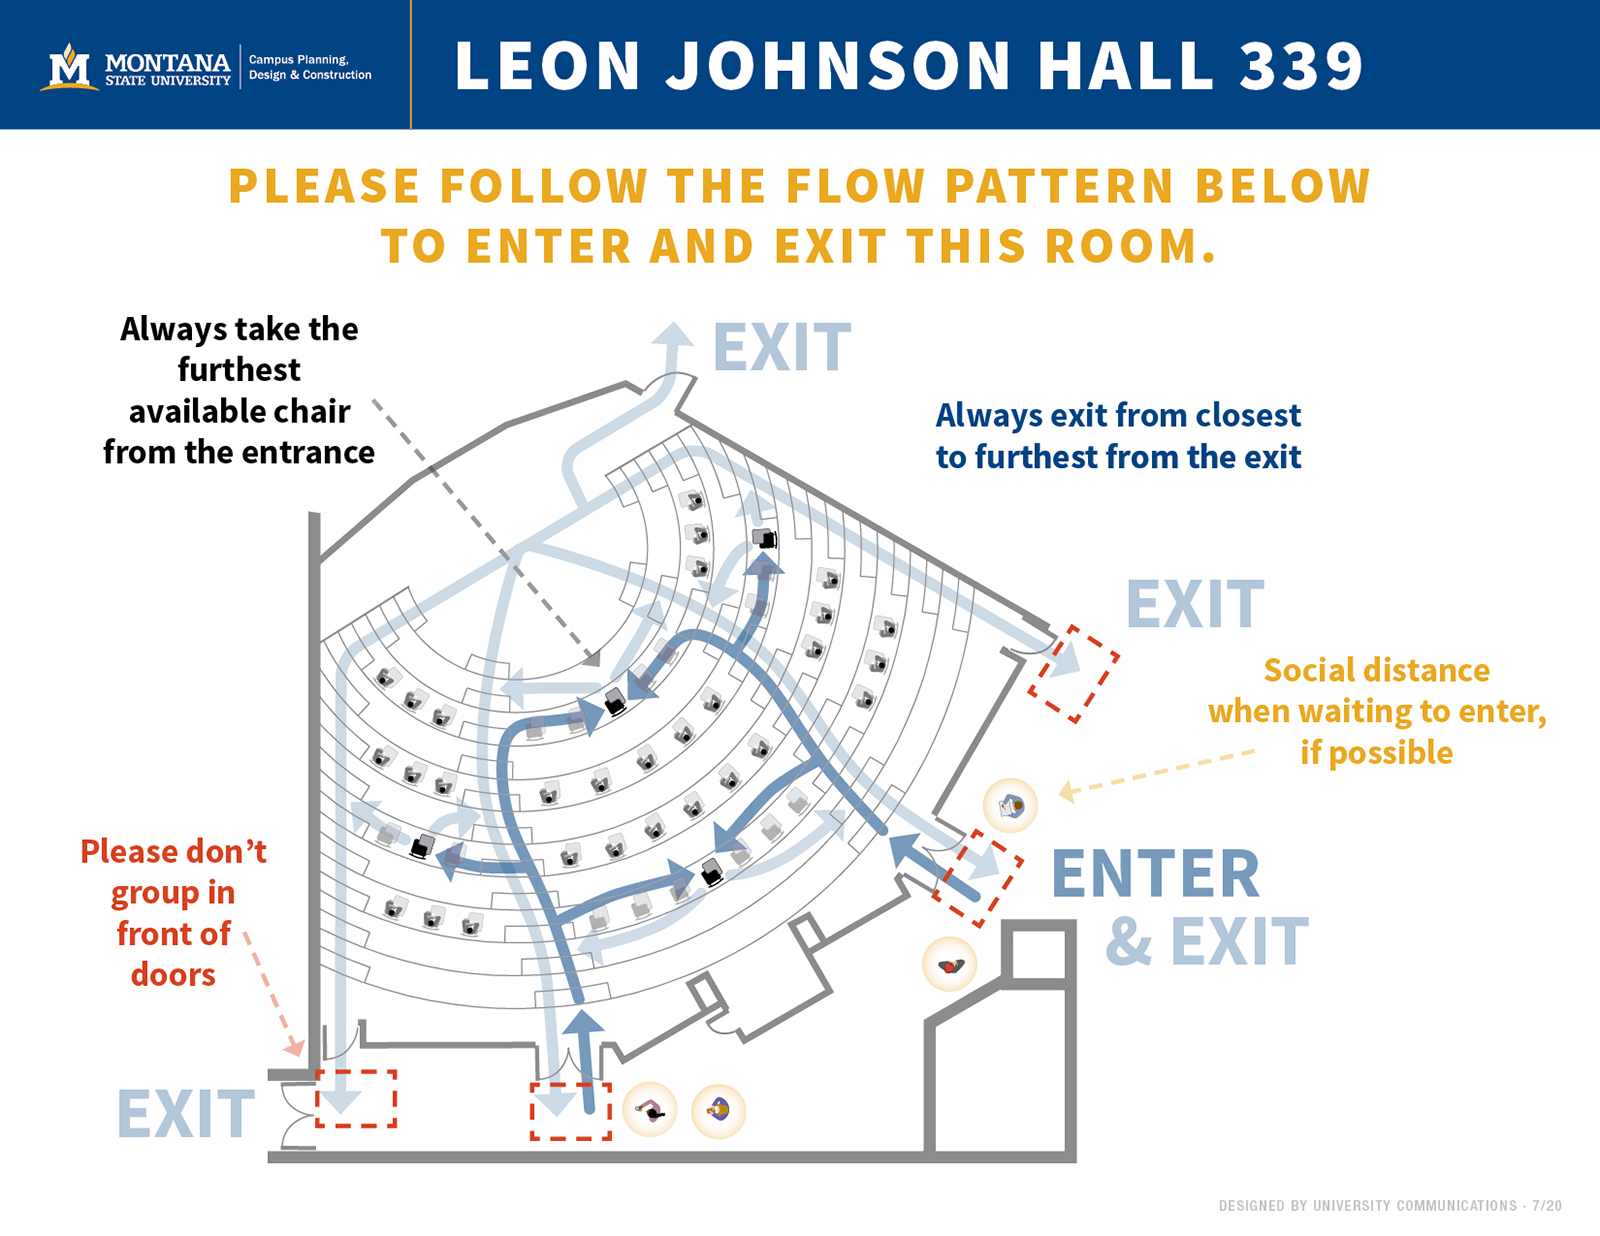 Leon Johnson Hall 339 Room Layout Diagram